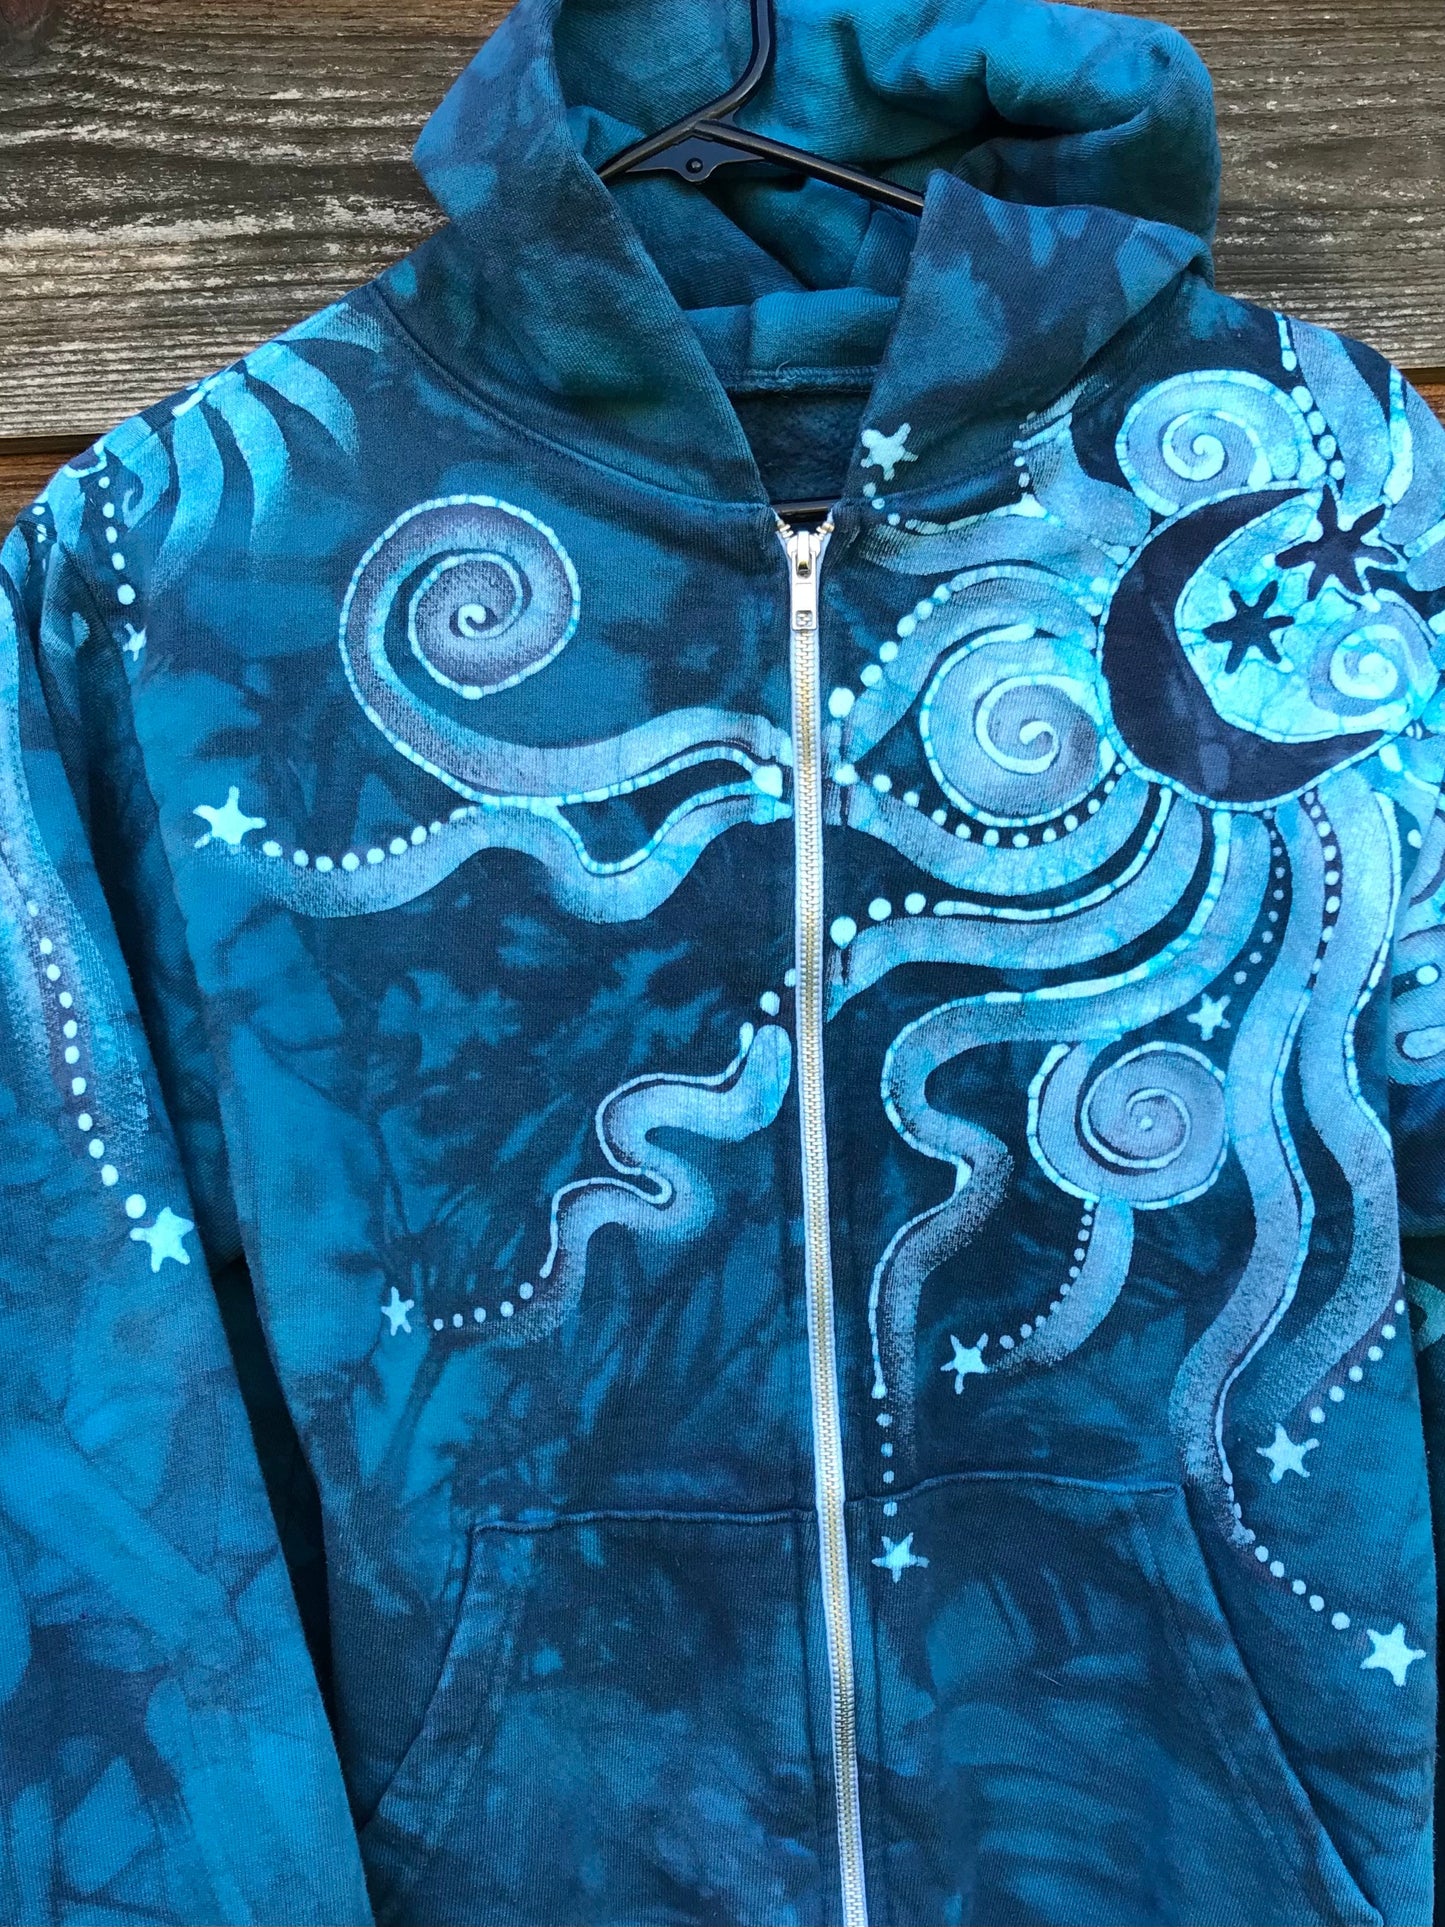 Denim Blue Moon Handcrafted Batik Zipper Hoodie - Size XS hoodie batikwalla 